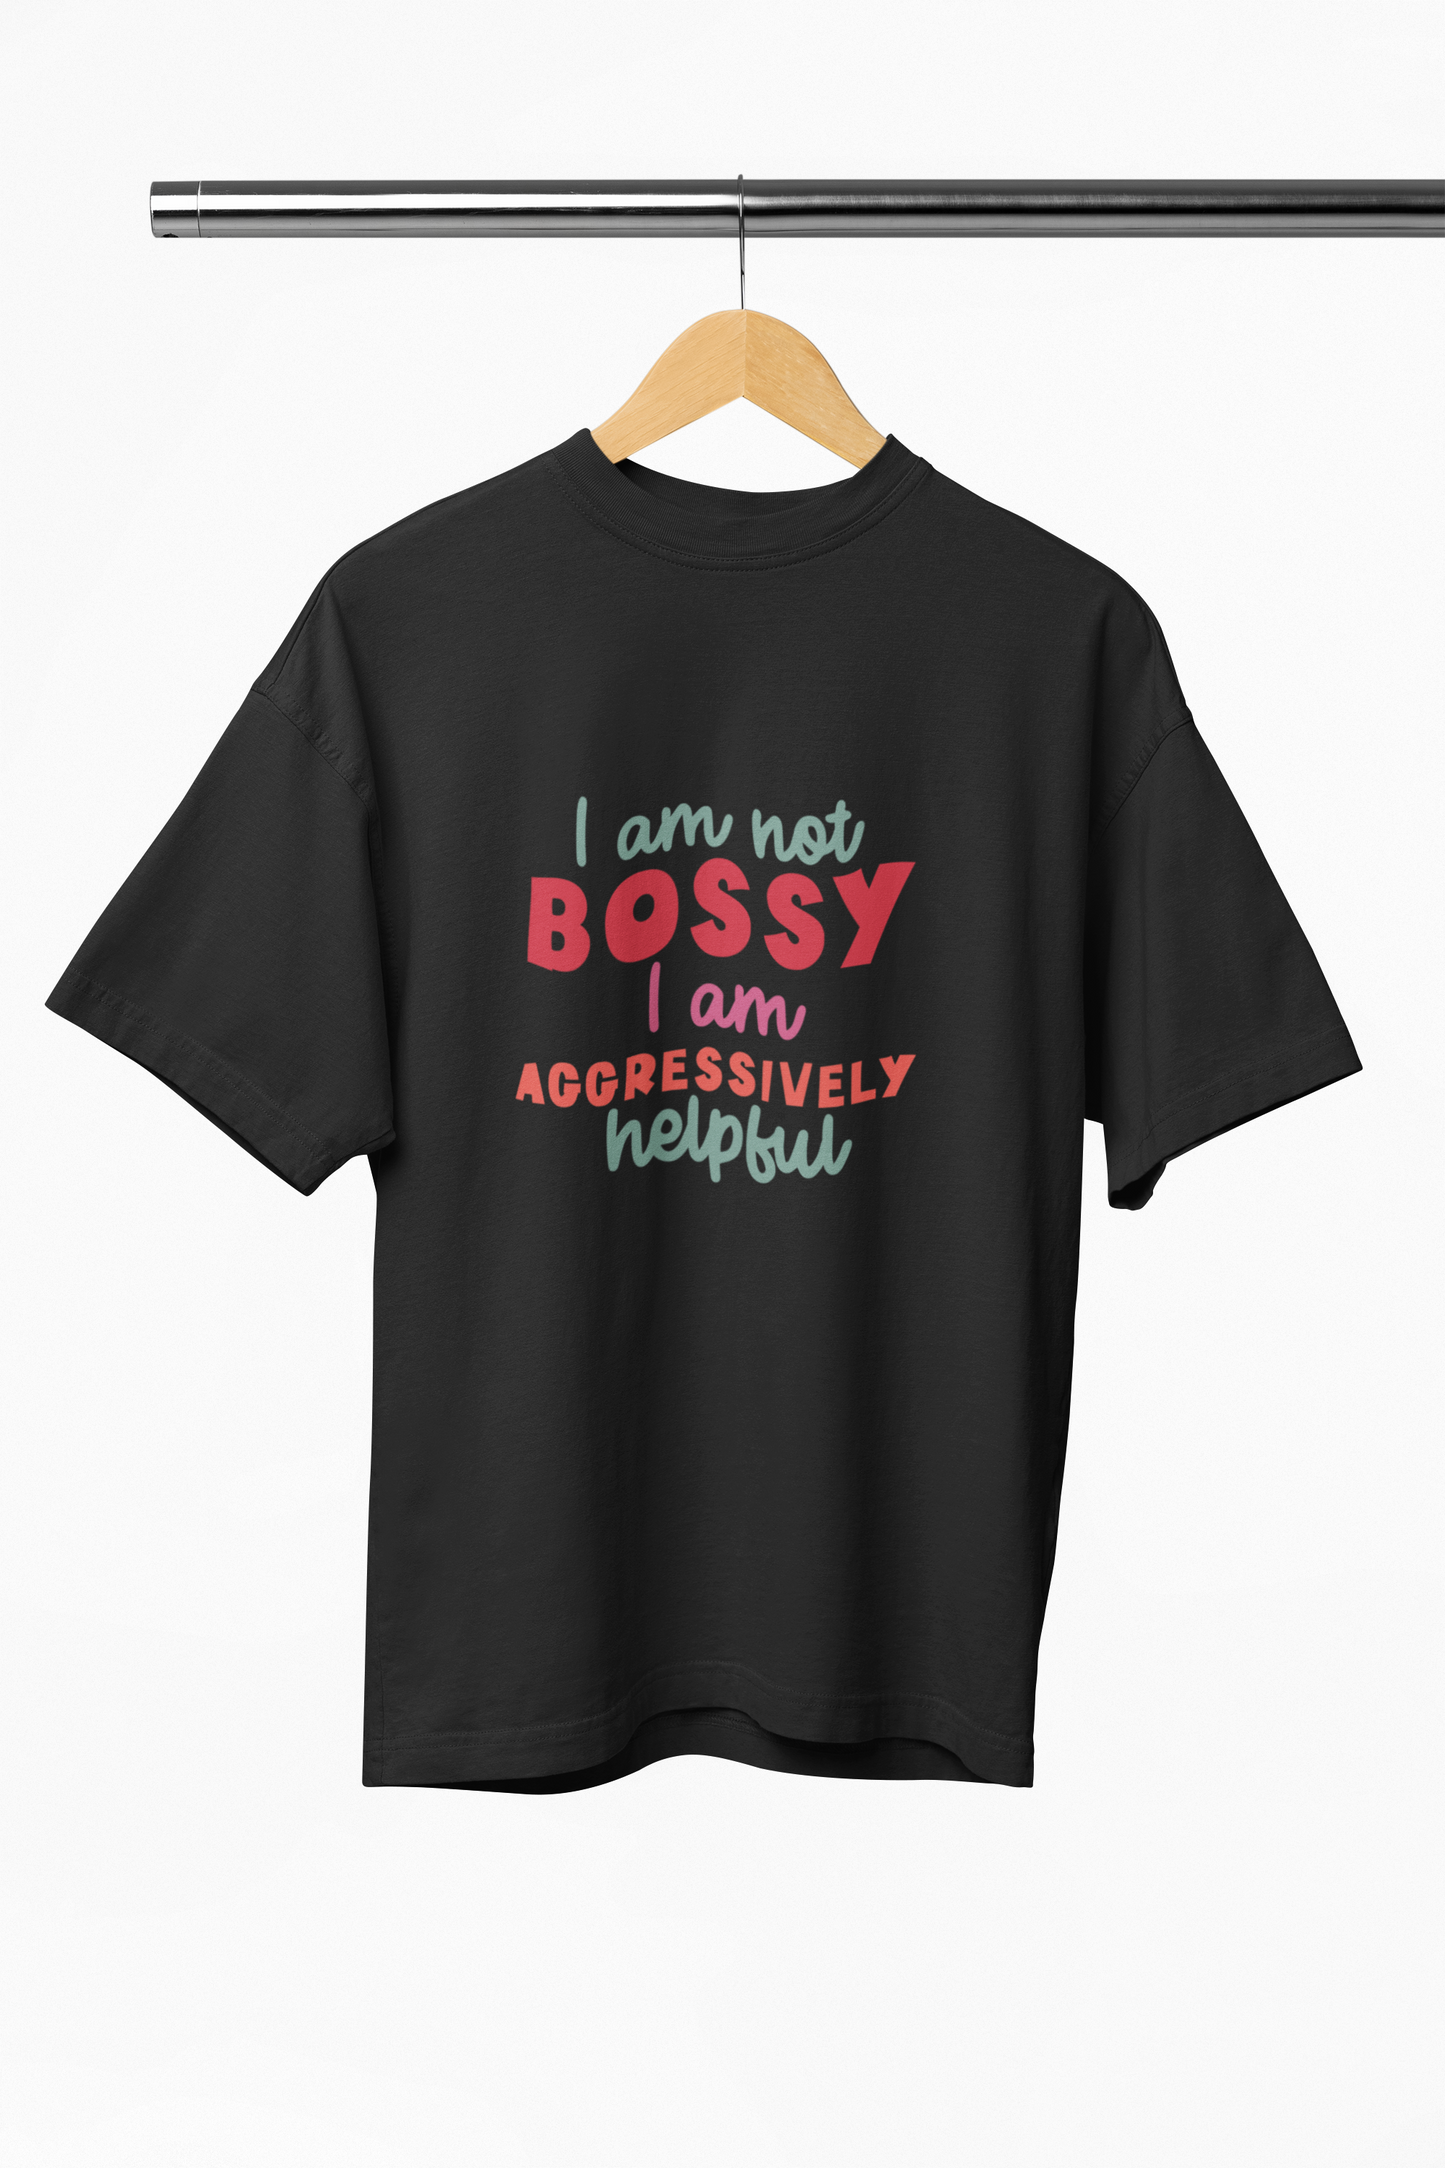 Unisex Oversized Slogan Tshirt - Bossy